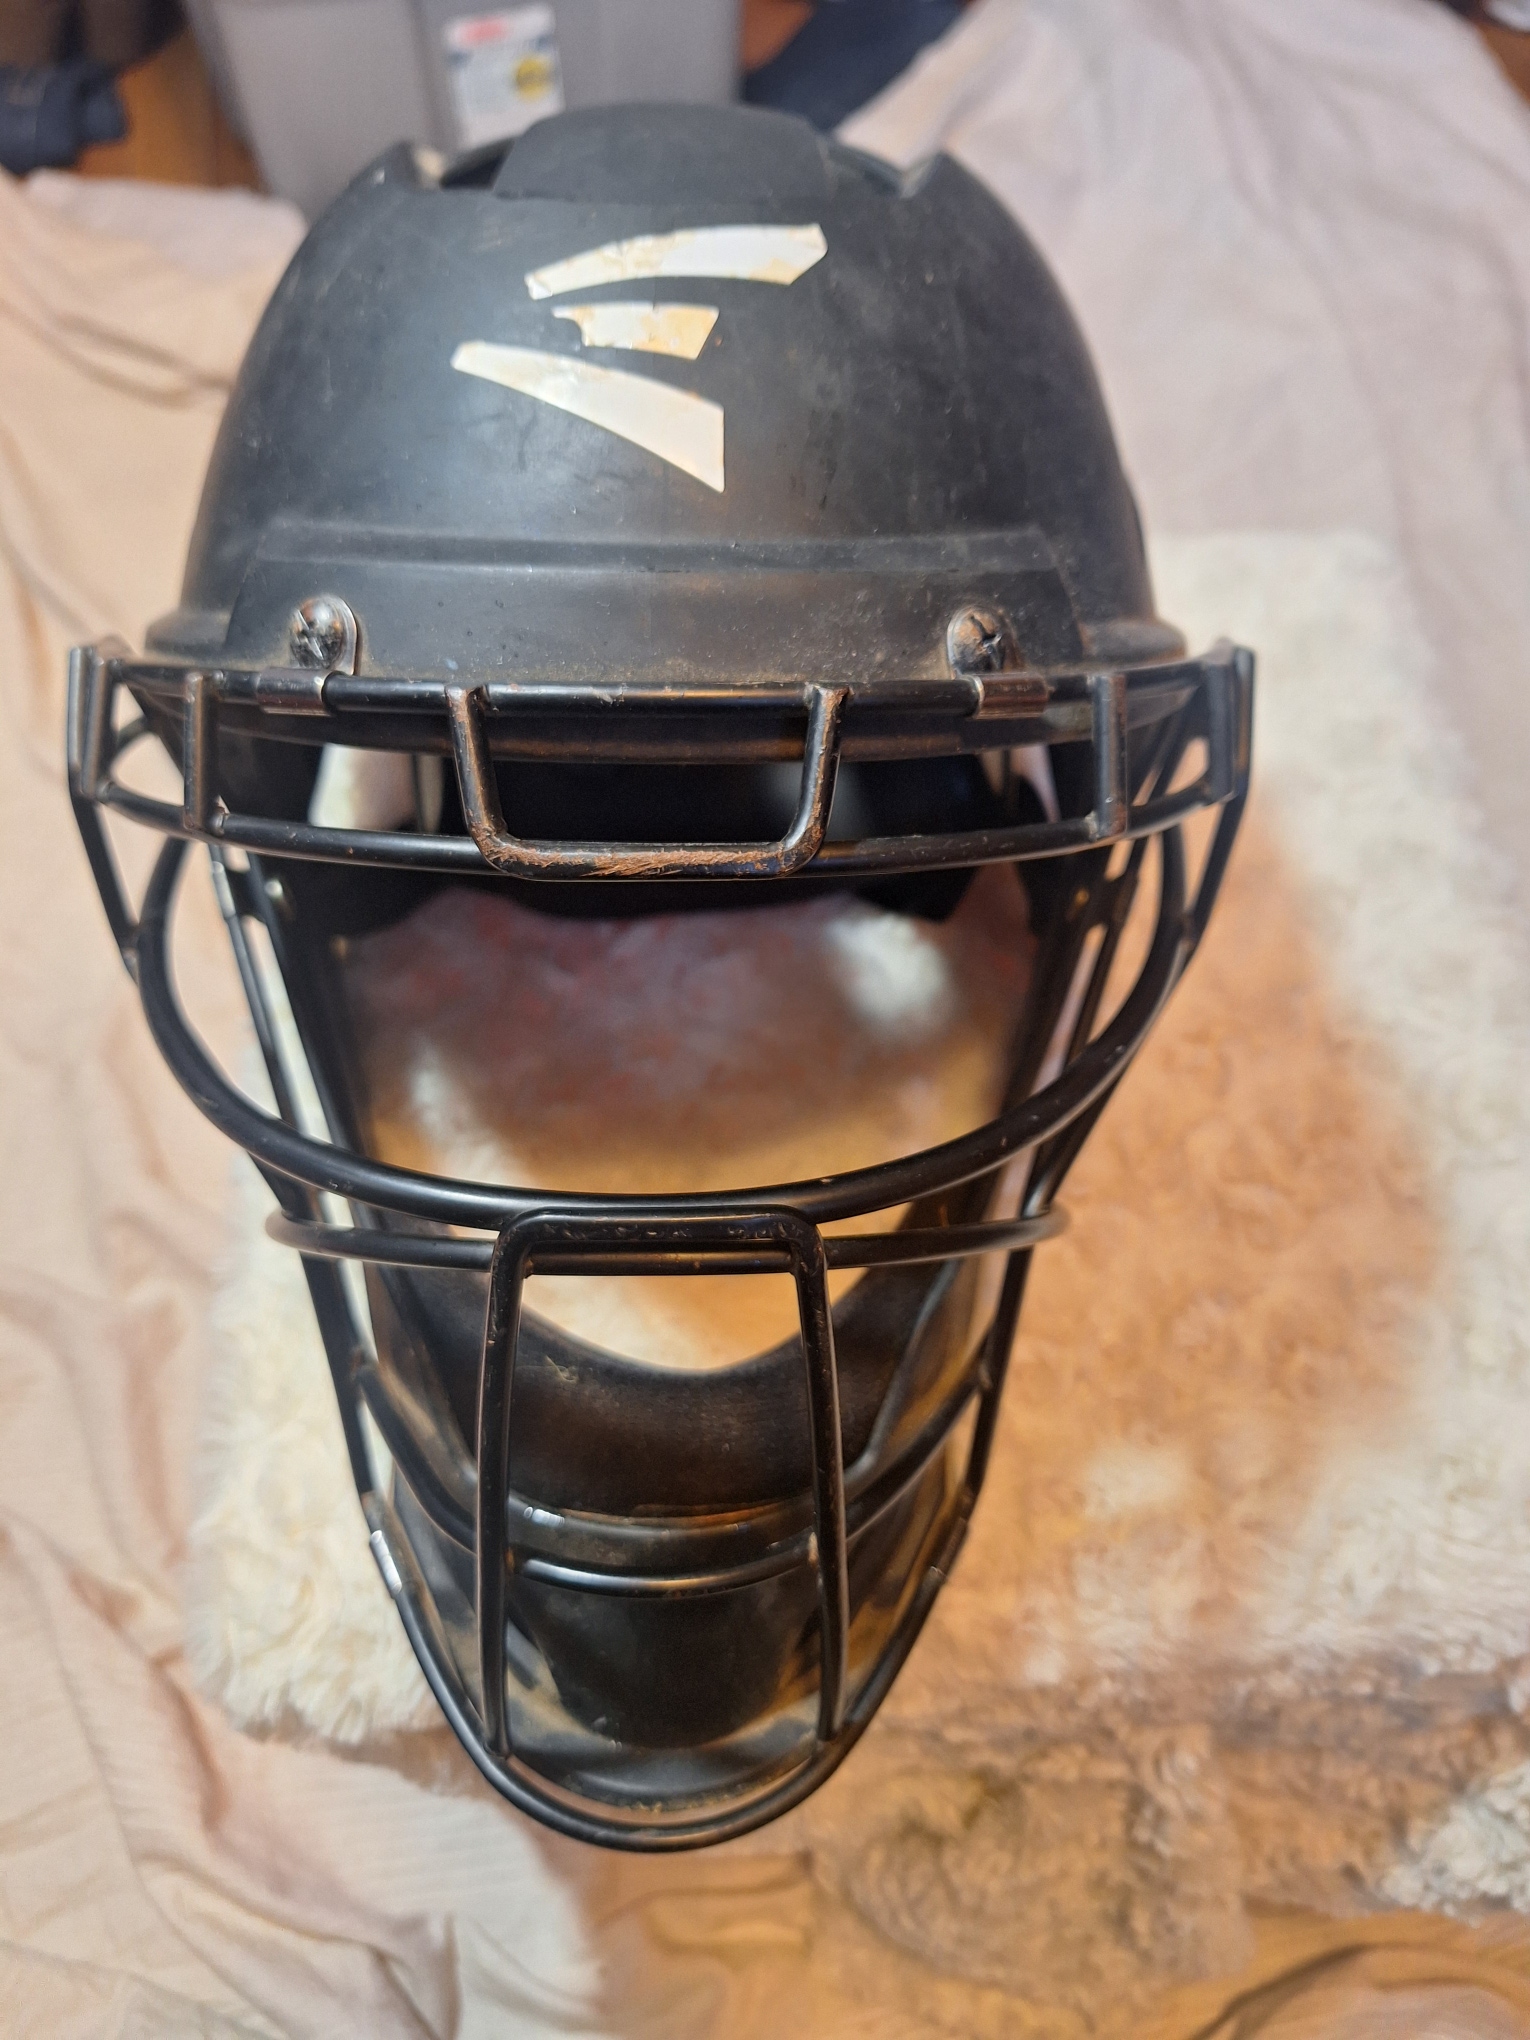 easton baseball catchers helmet facemask headgear adult l ages 14+